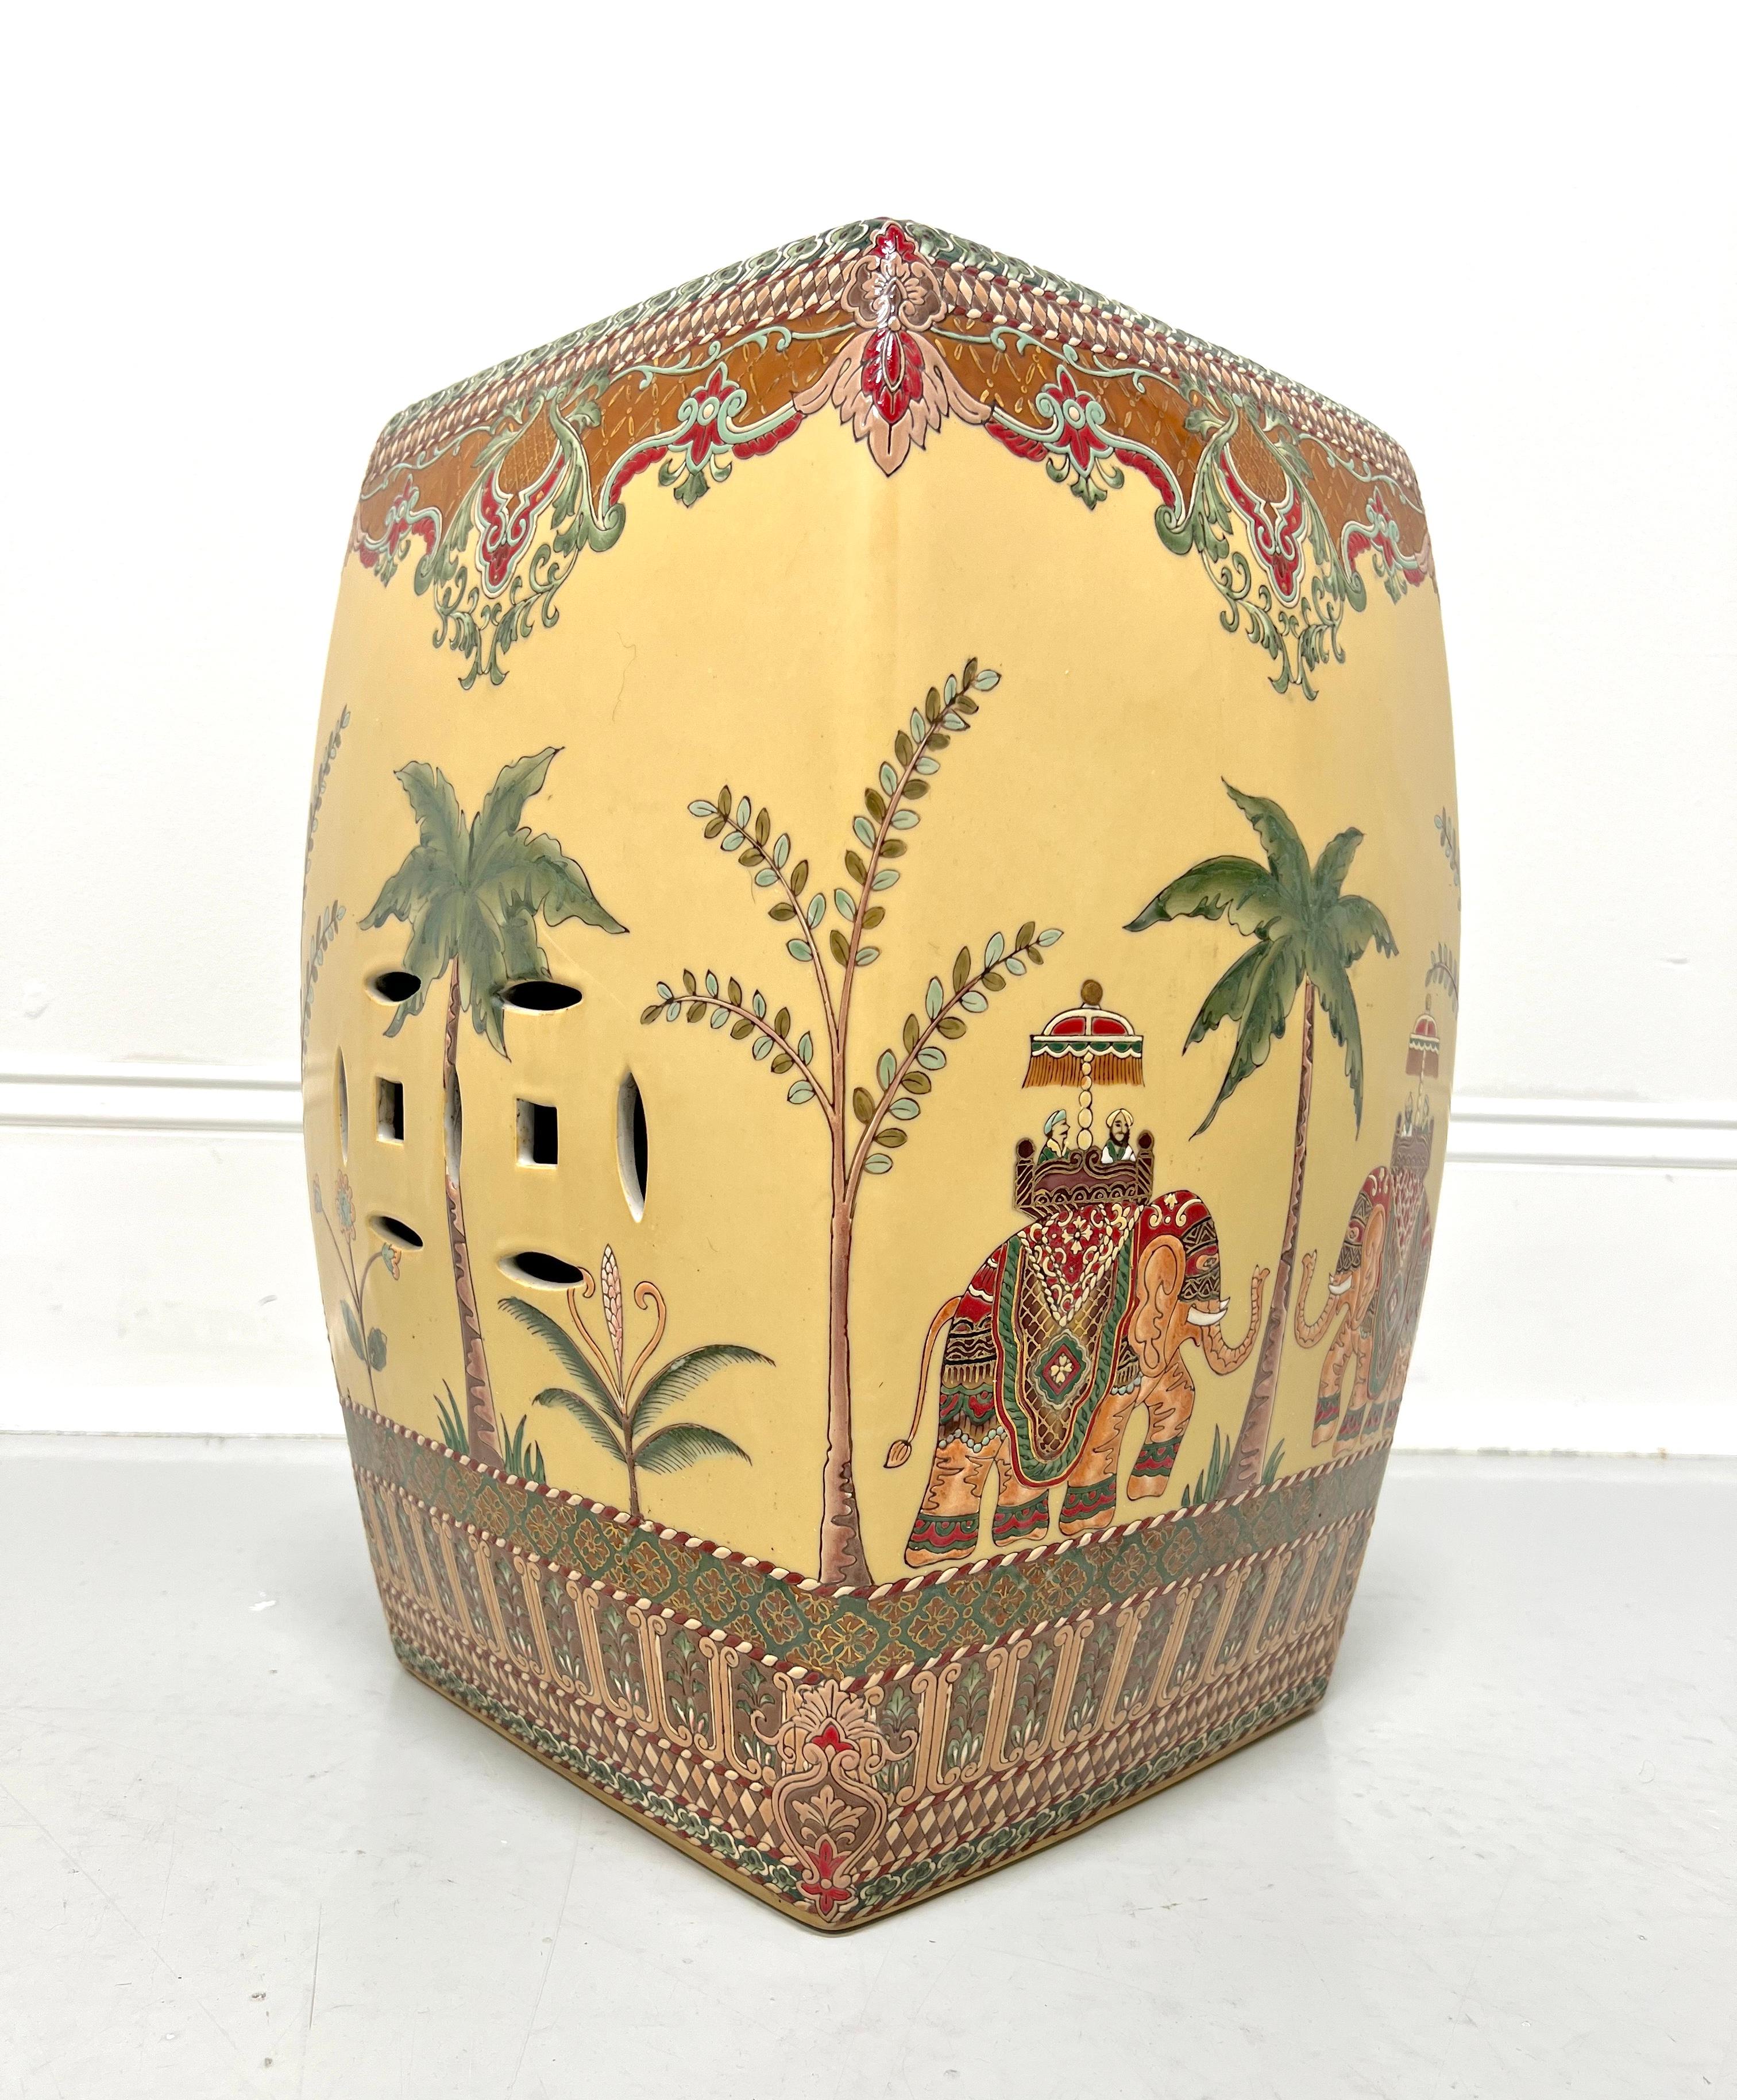 Asian Mid 20th Century Ceramic Garden Stool Tropical Theme with Elephants & Palm Trees